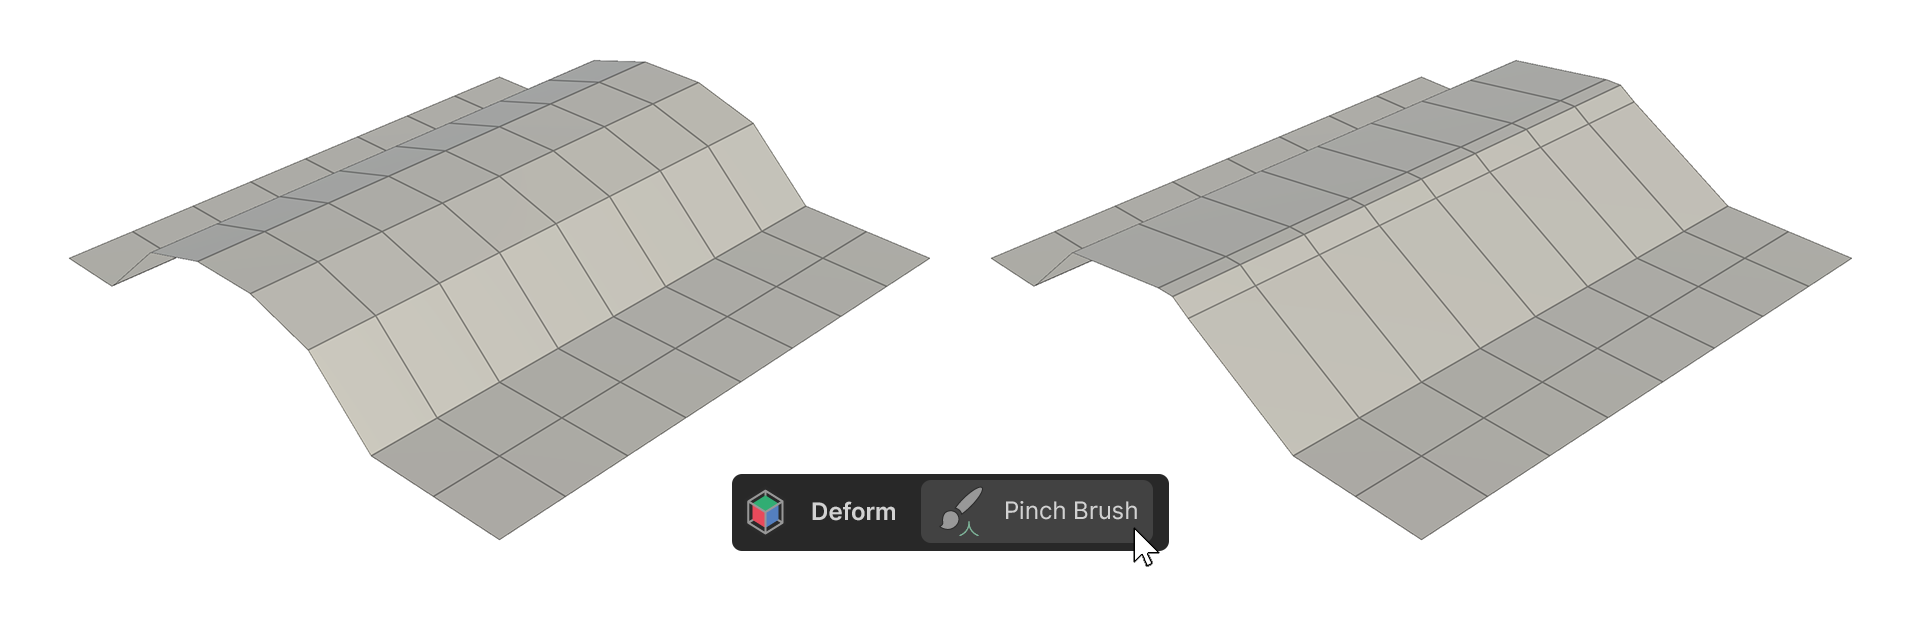 basic_Modeling_Deform_PinchBrush